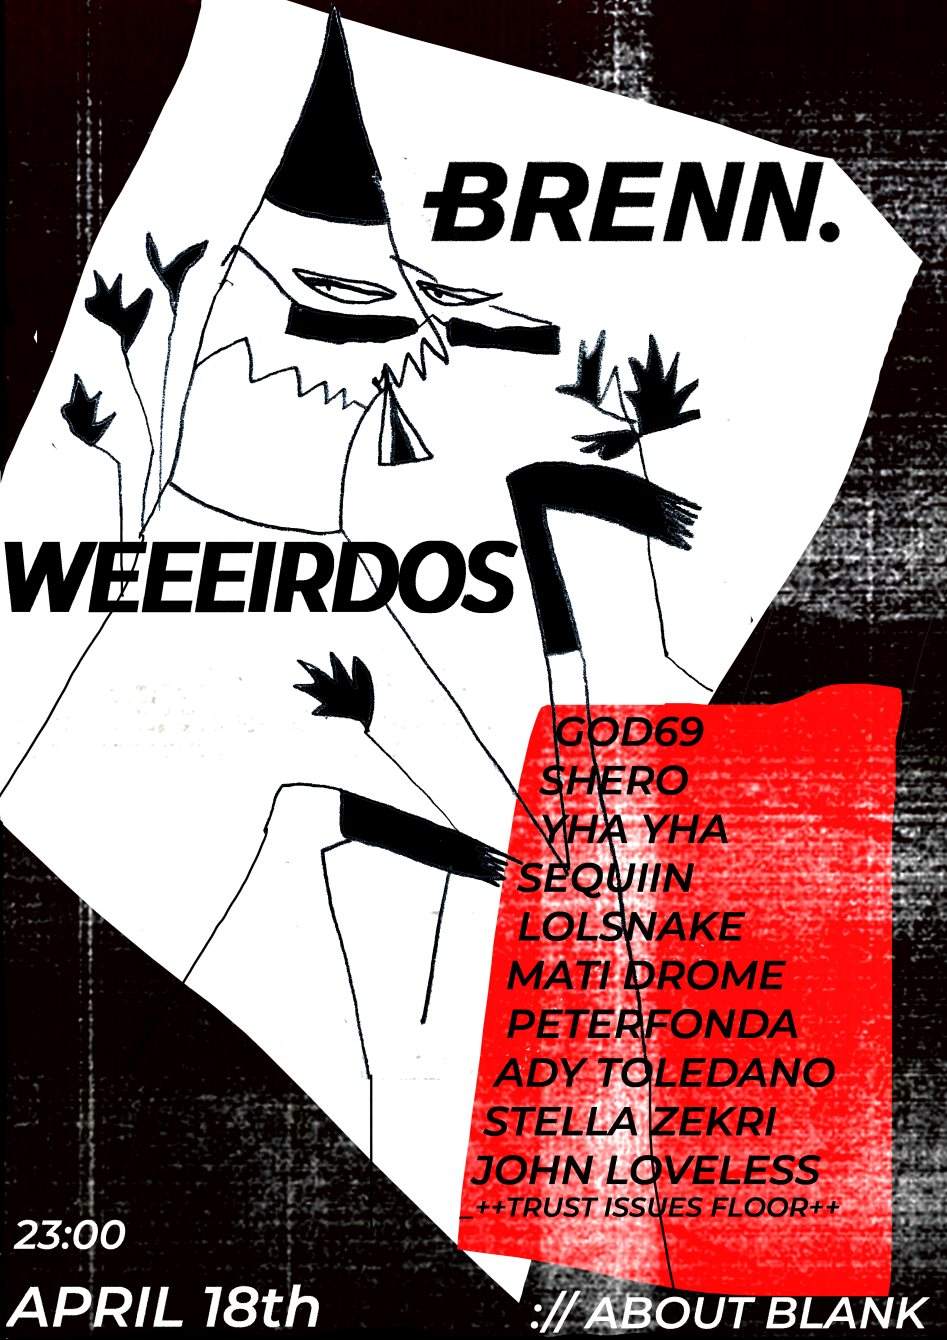 Brenn. x weeeirdos - フライヤー表